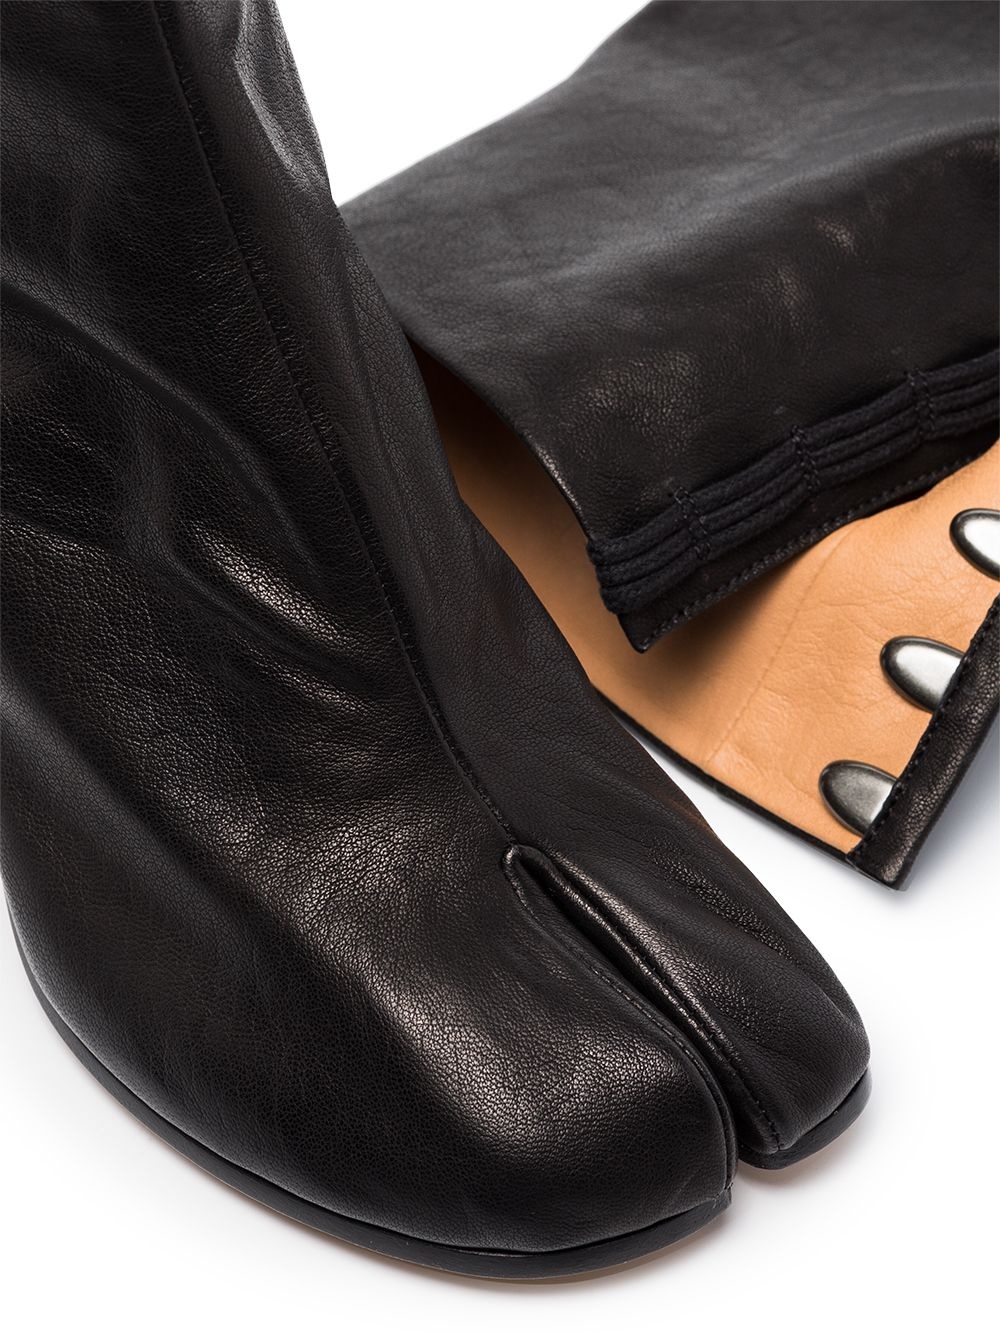 Tabi leather boots - 2